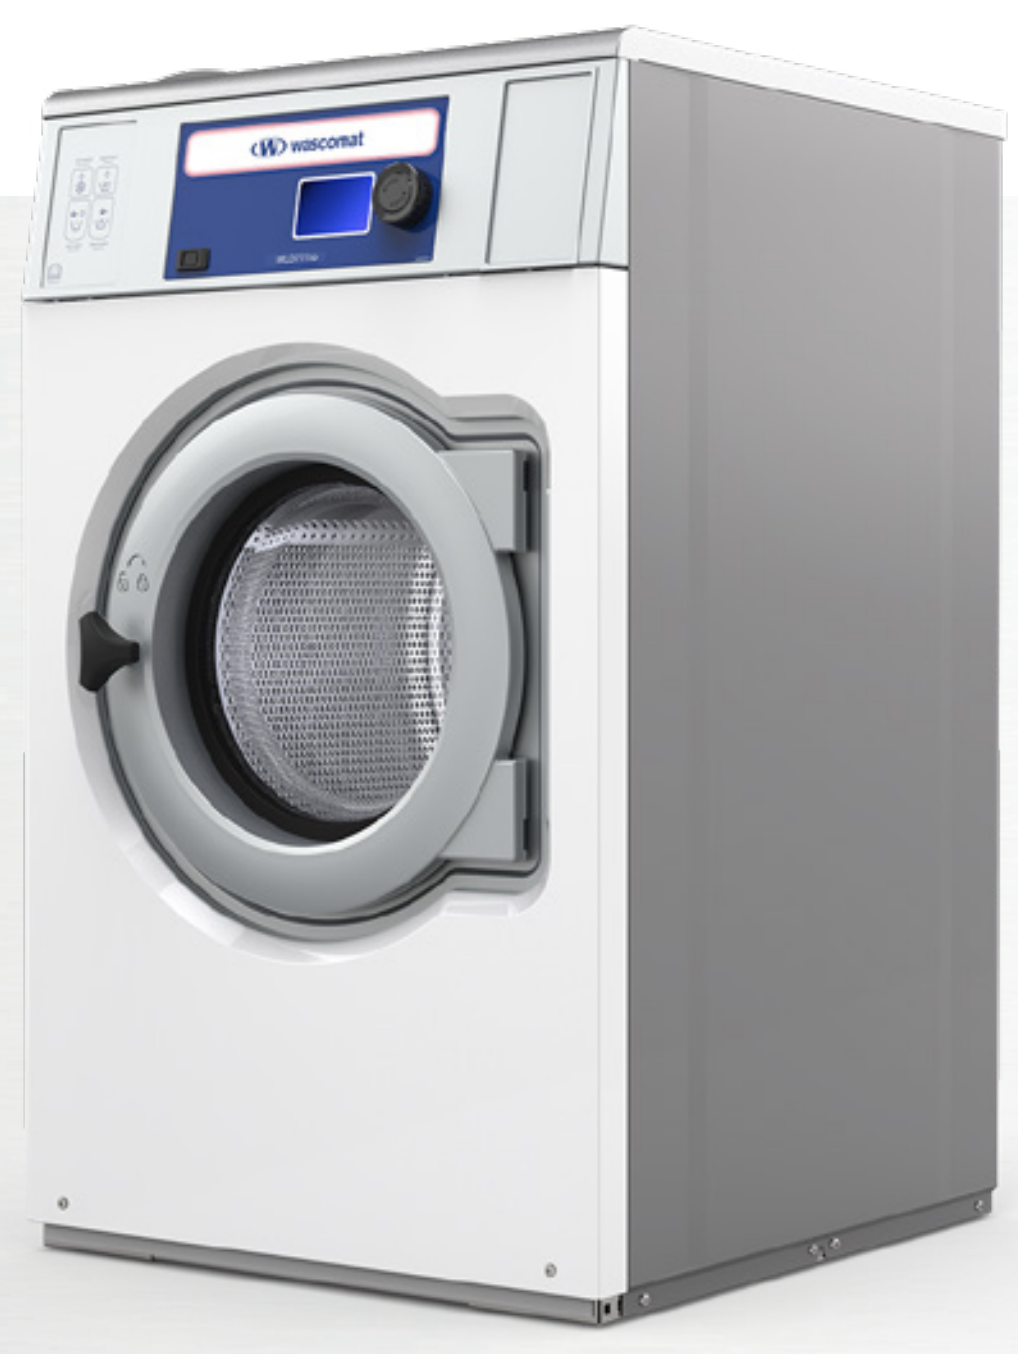 New 2022 Wascomat Wld725 Opl - Lakeside Laundry Equipment